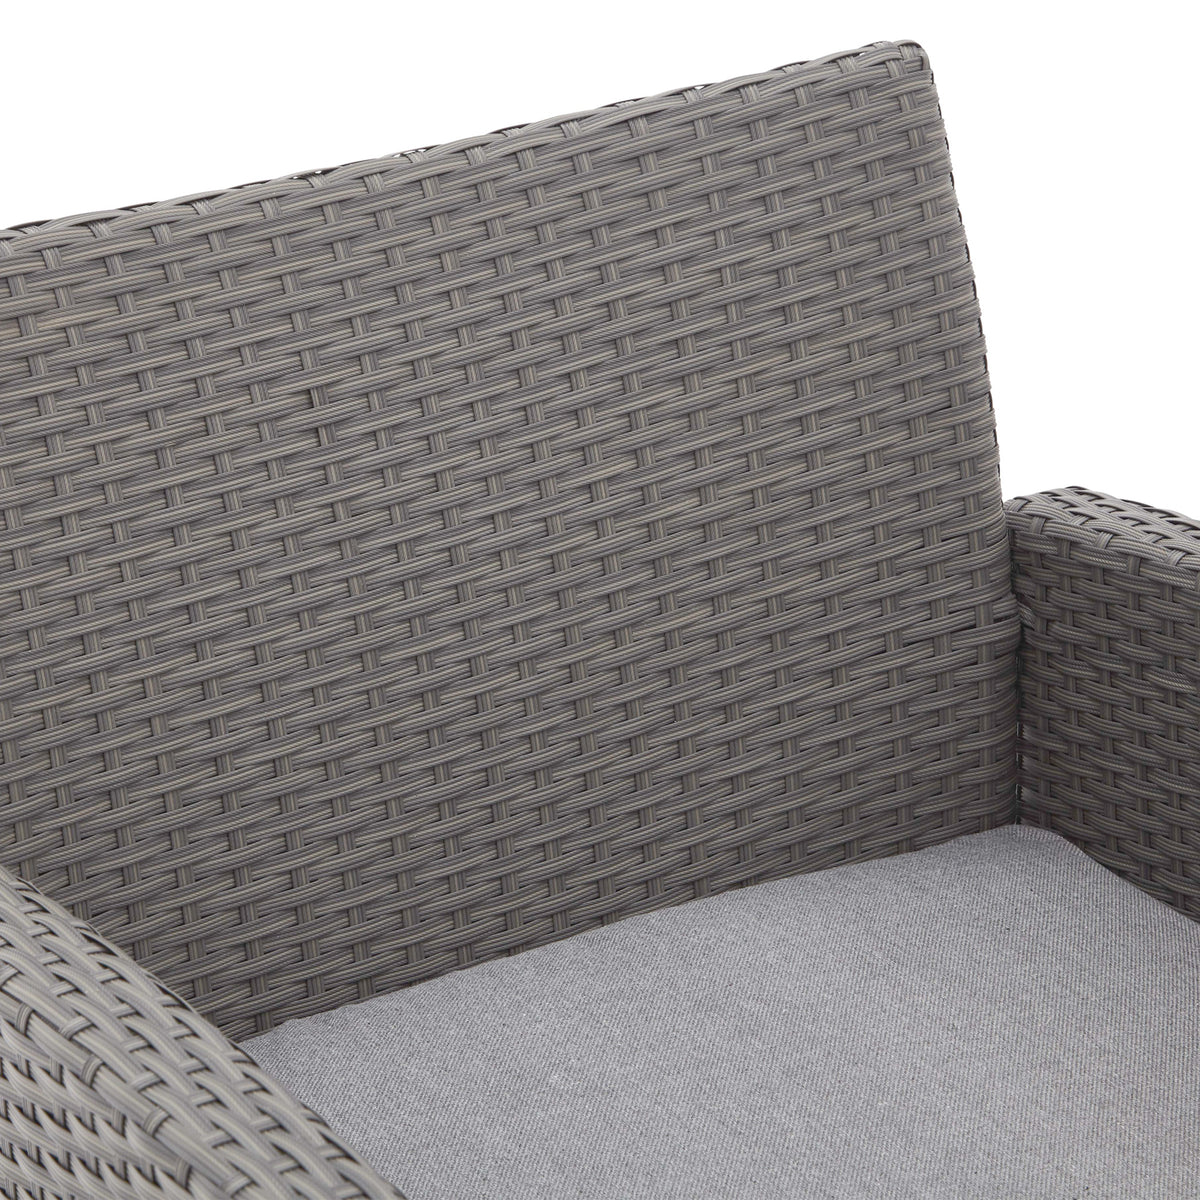 Vada Grey Rattan Conversation Garden Sofa Set